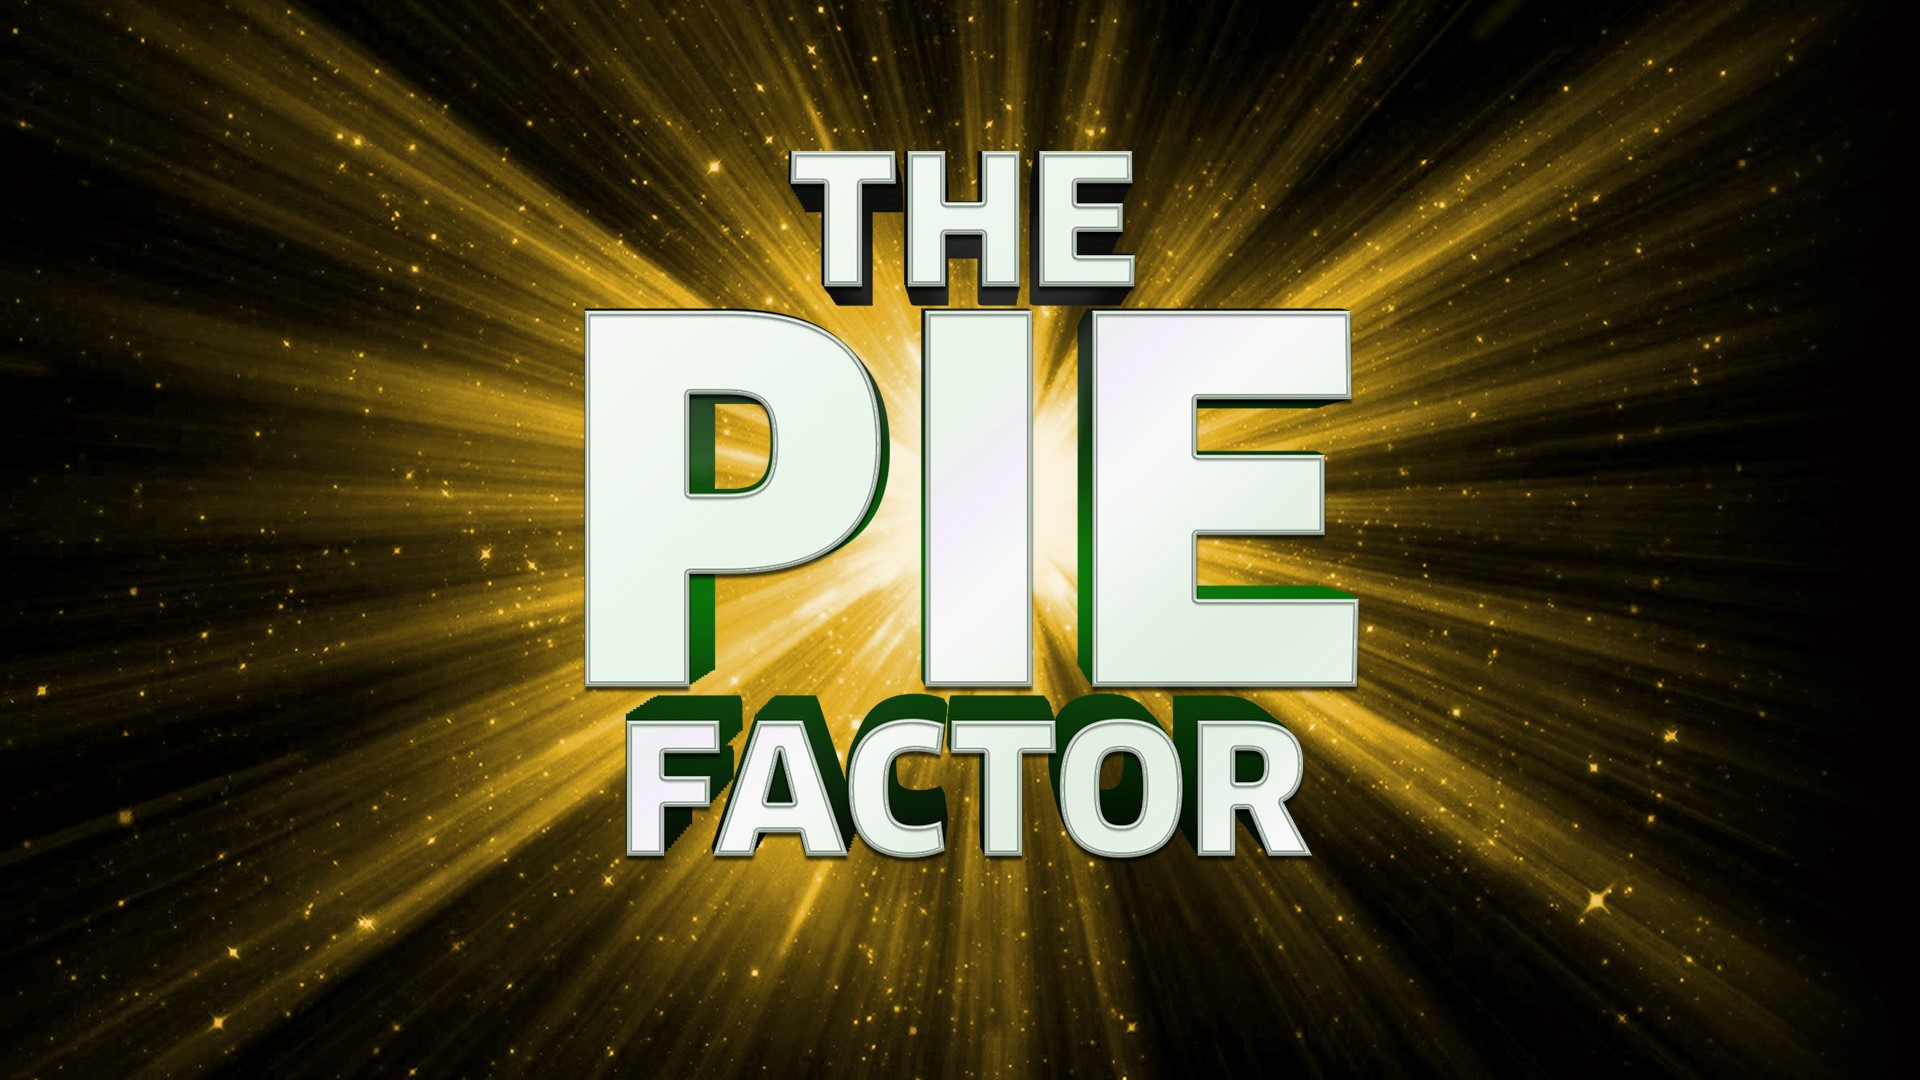 Pie Factor